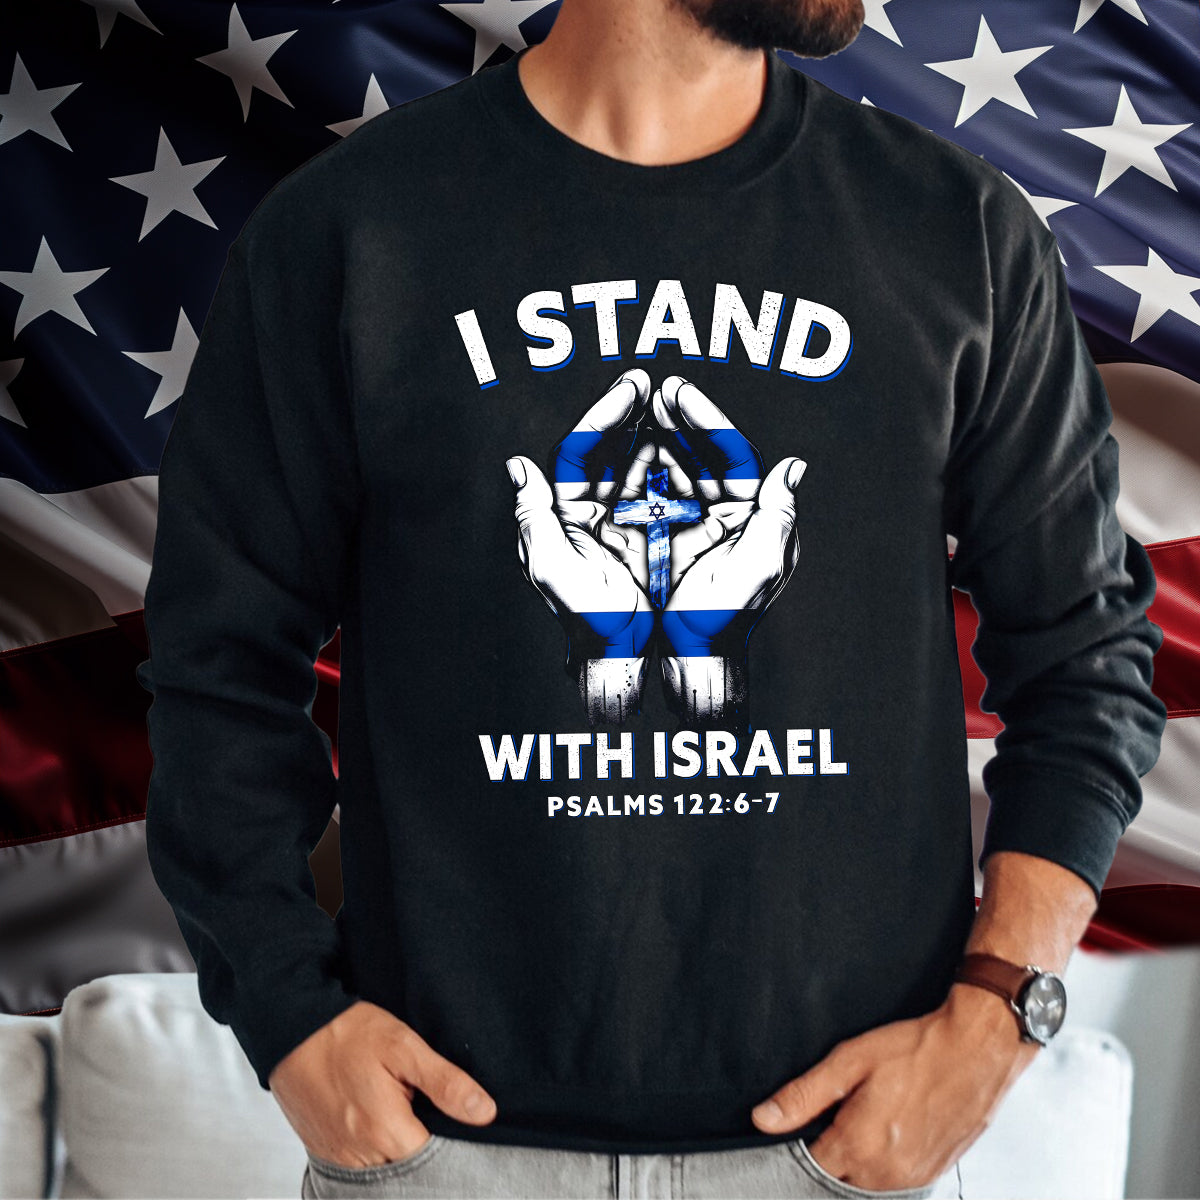 Teesdily | I Stand With Israel Psalms 122:6-7 Jesus Shirt, Israel Flag, Jesus Lovers, Unisex Tshirt Hoodie Sweatshirt size S-5XL / Mug 11-15oz